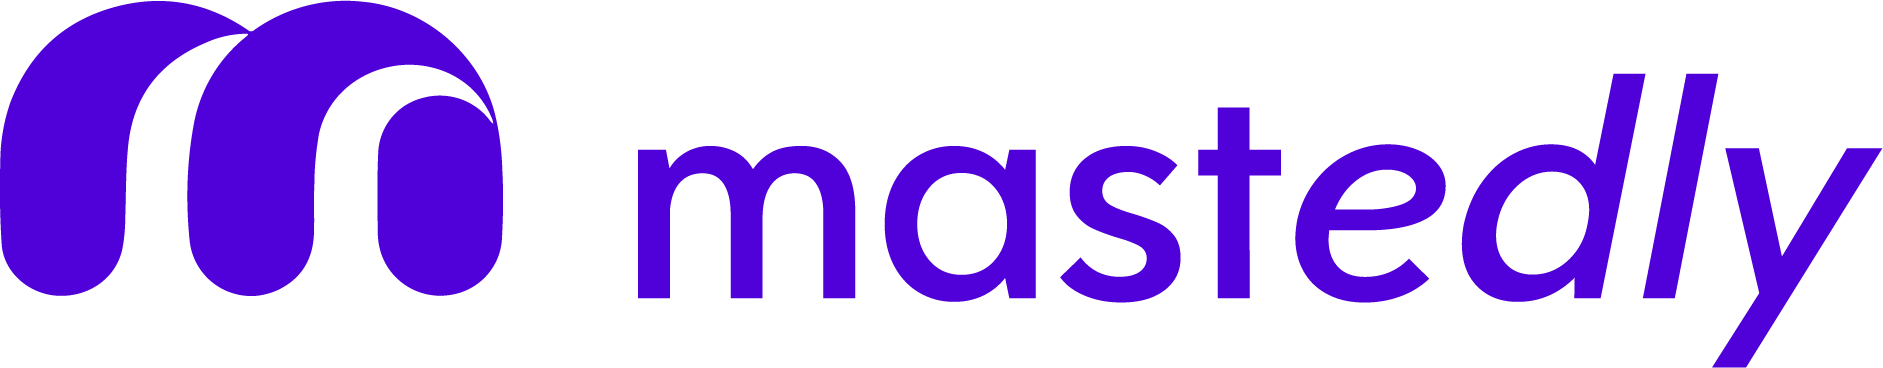 Purple Mastedly logo in horizontal format